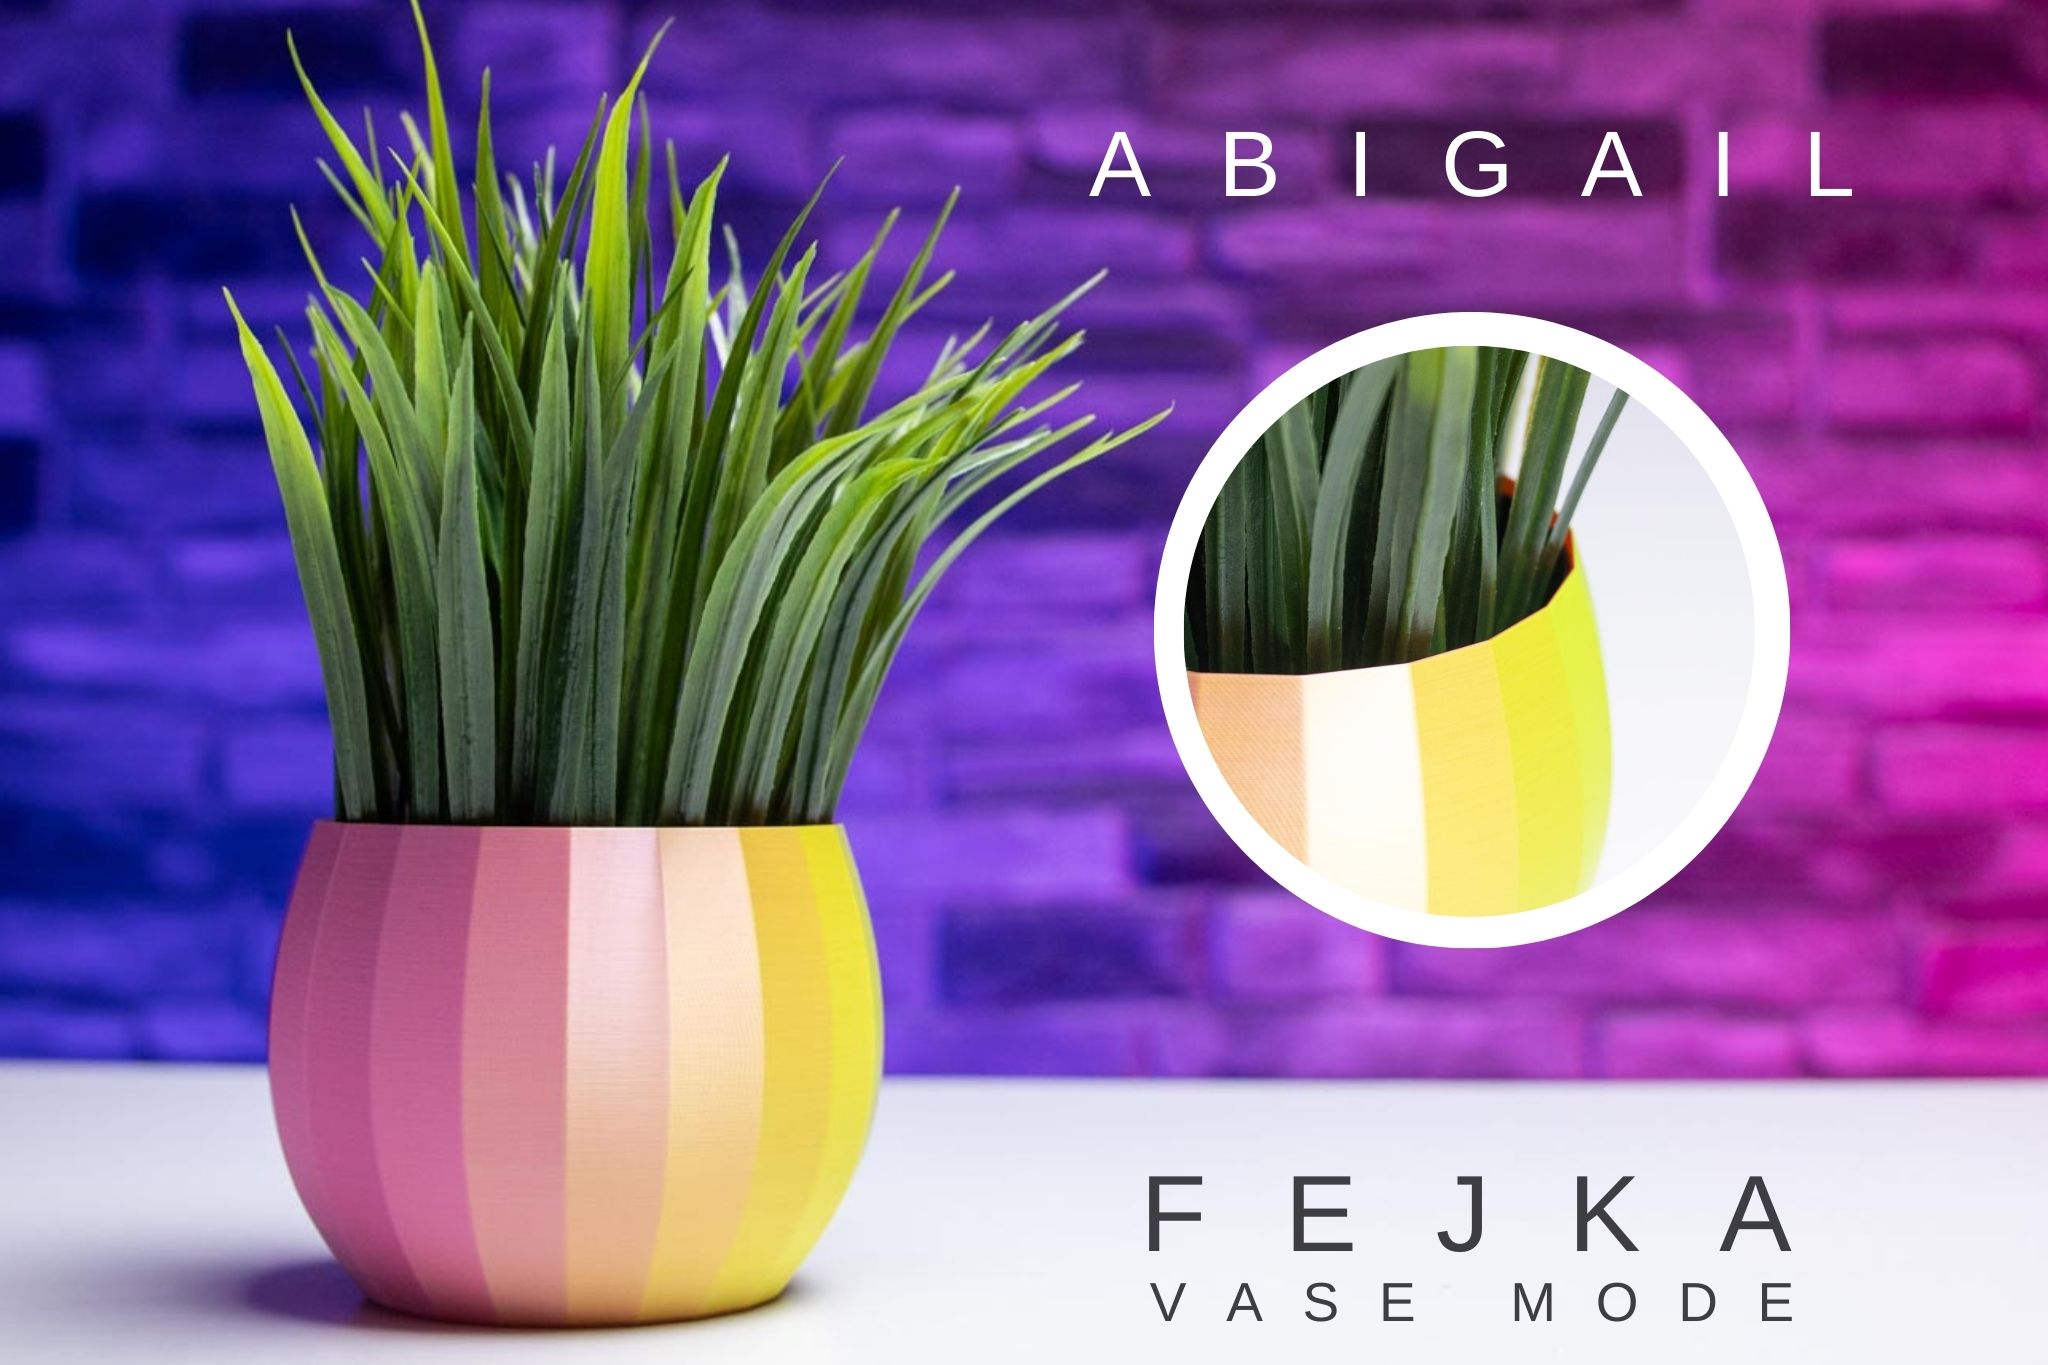 3D Printed Planter and Pot for Ikea Fejka - Vase ABIGAIL